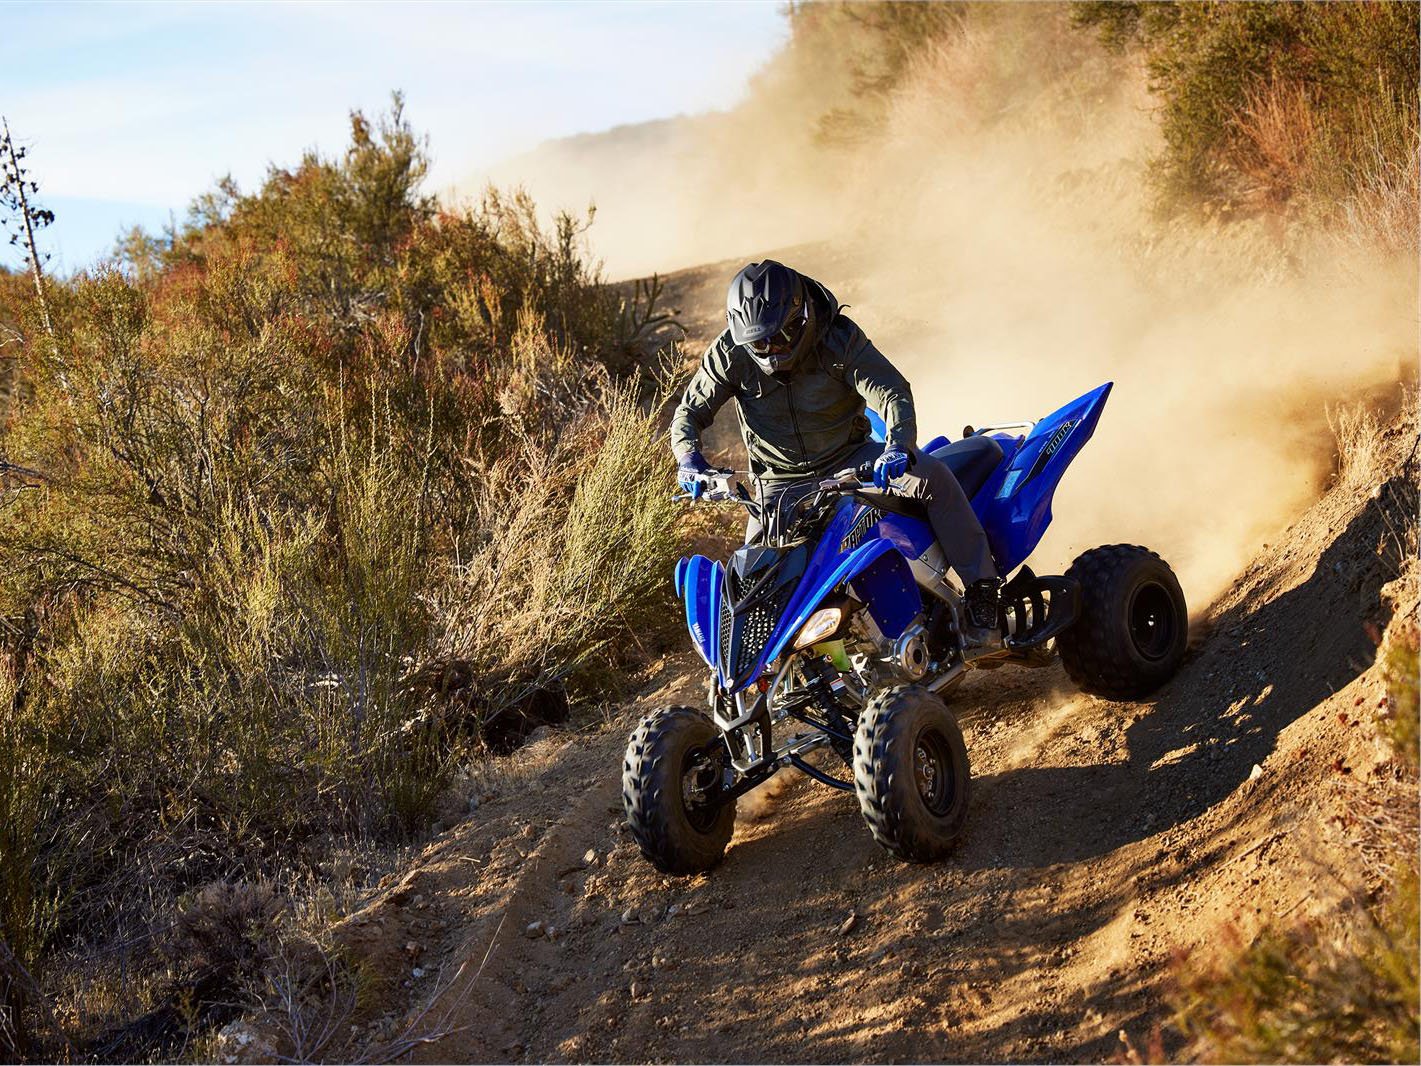 New 2022 Yamaha Raptor 700R | ATVs in EL Cajon CA | Team Yamaha Blue